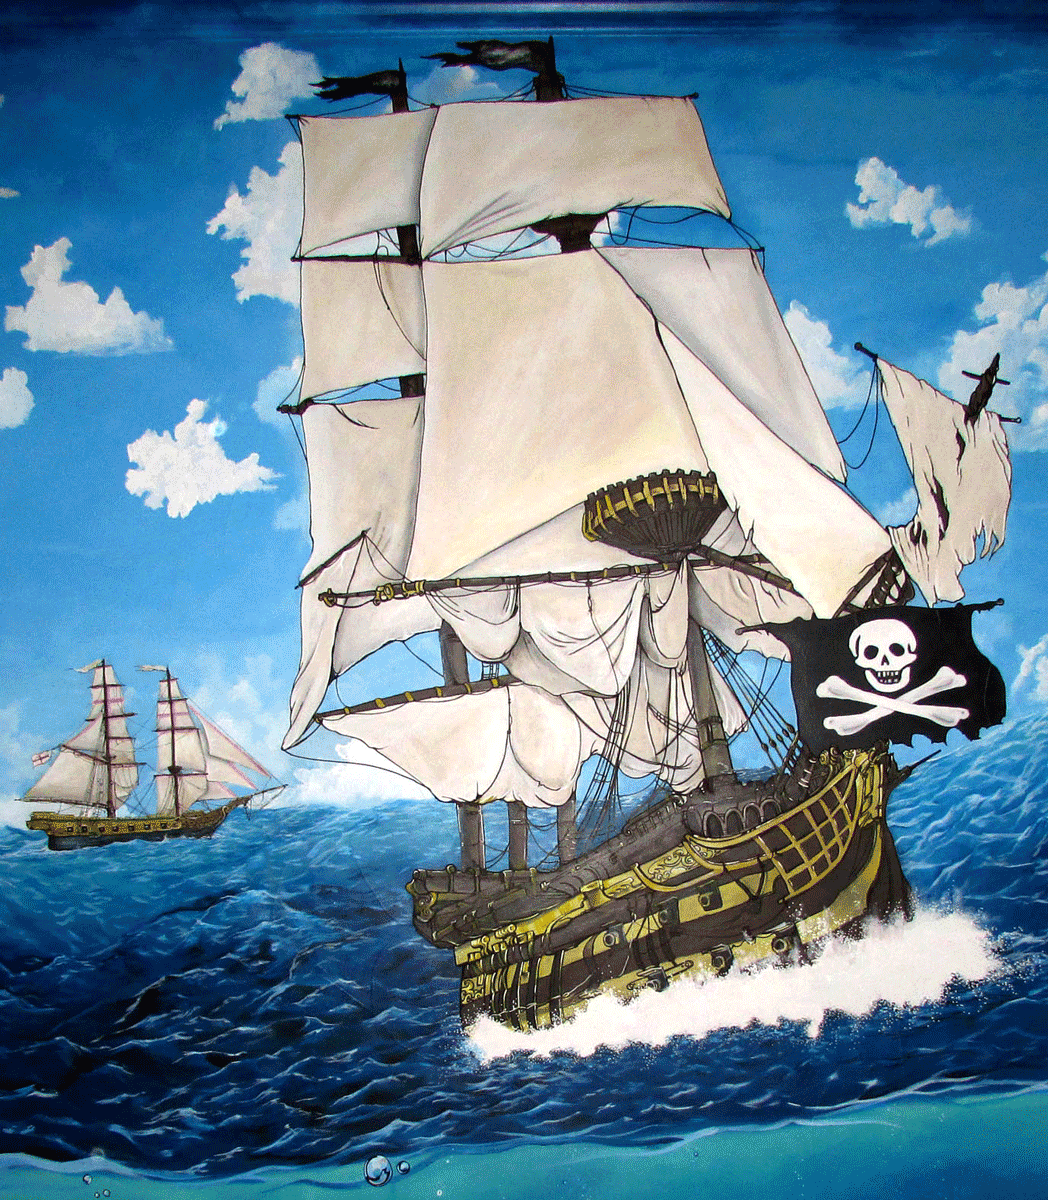 Pirate Ship, Galleon Mural Mesquite Texas